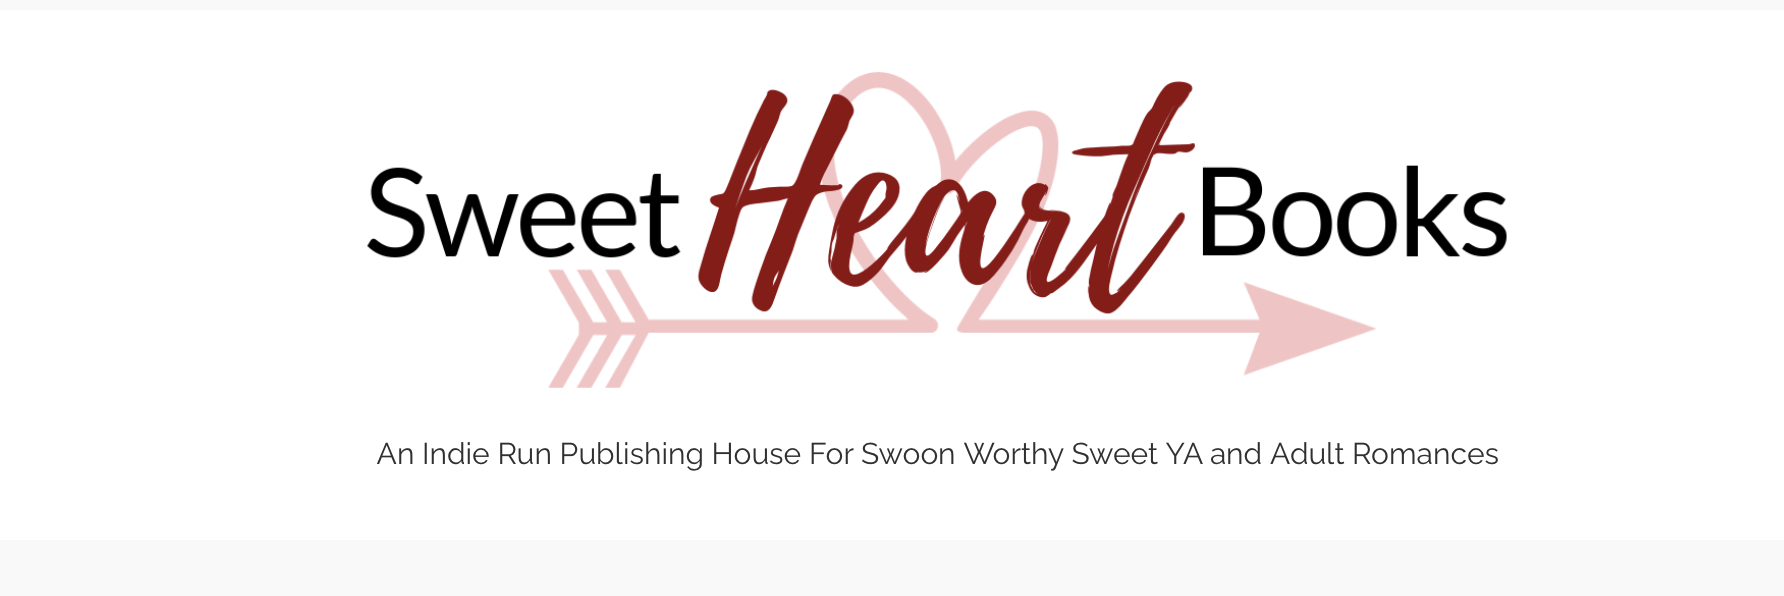 Sweet Heart Books romance publisher